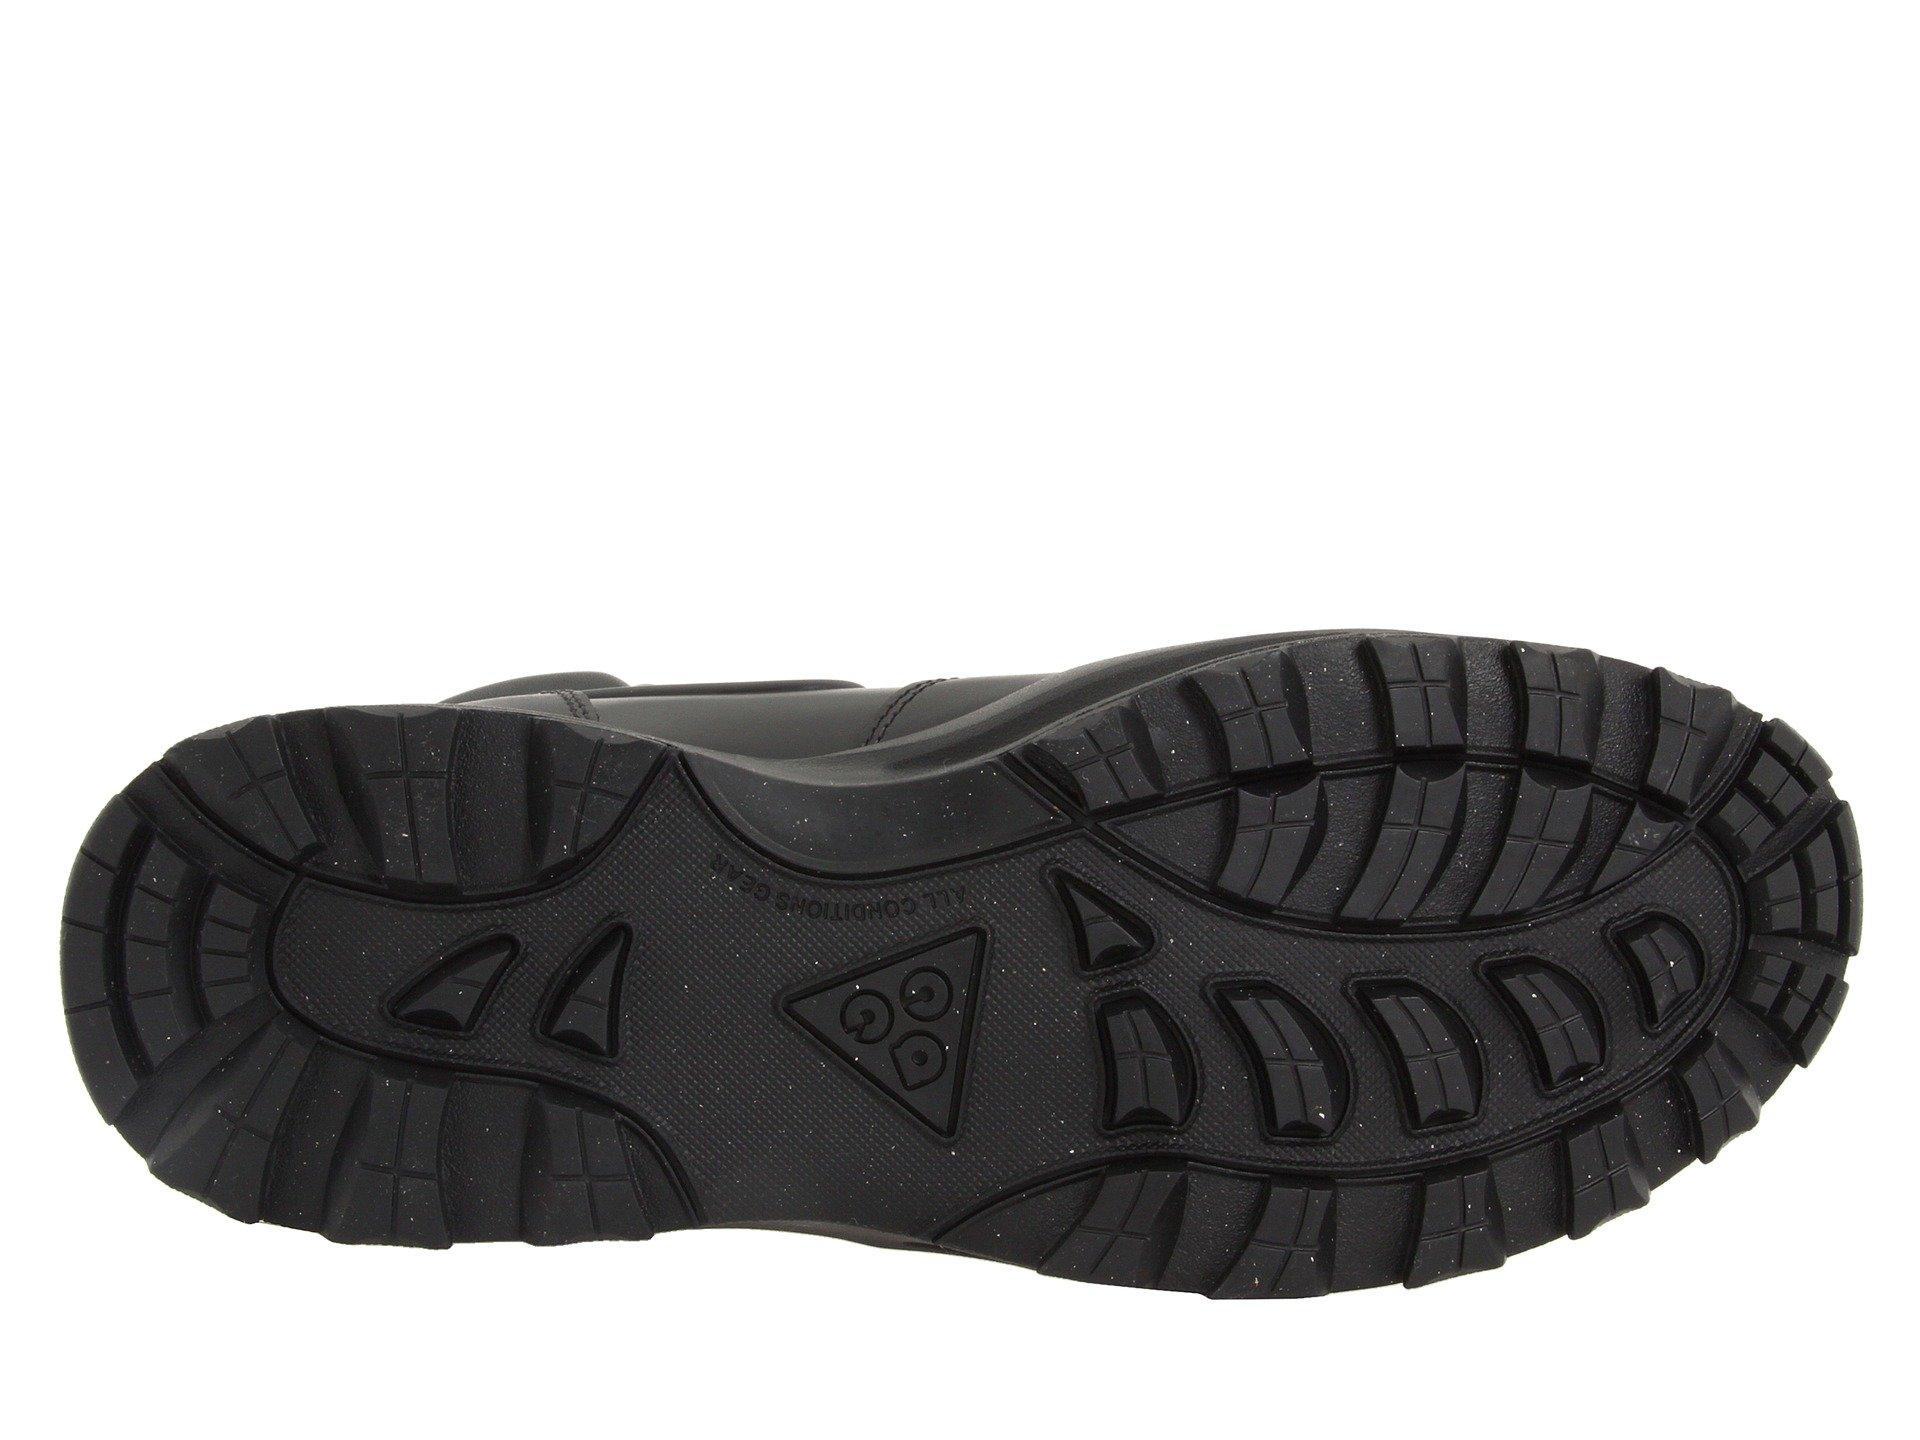 Nike Leather Manoa in Black,Black,Black (Black) for Men - Save 45% | Lyst